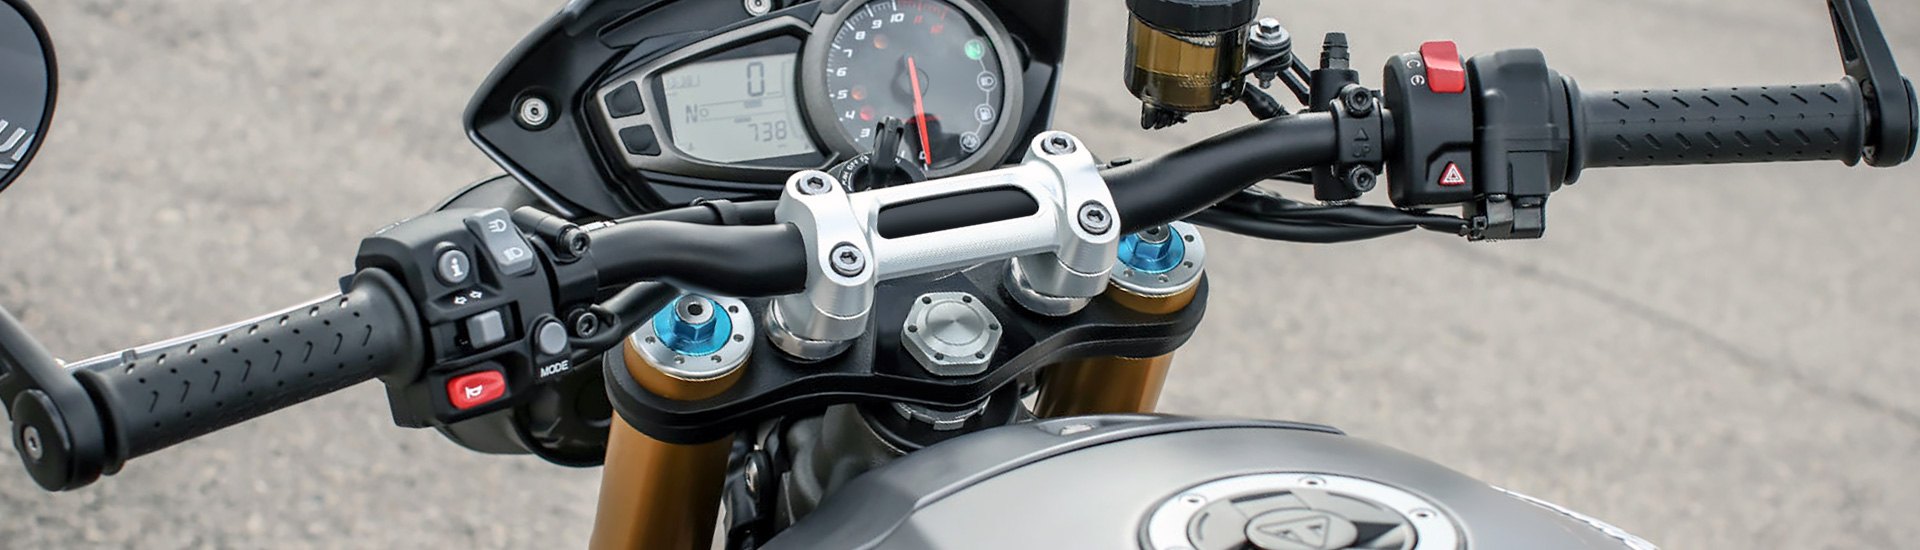 Motorcycle Handlebars & Controls